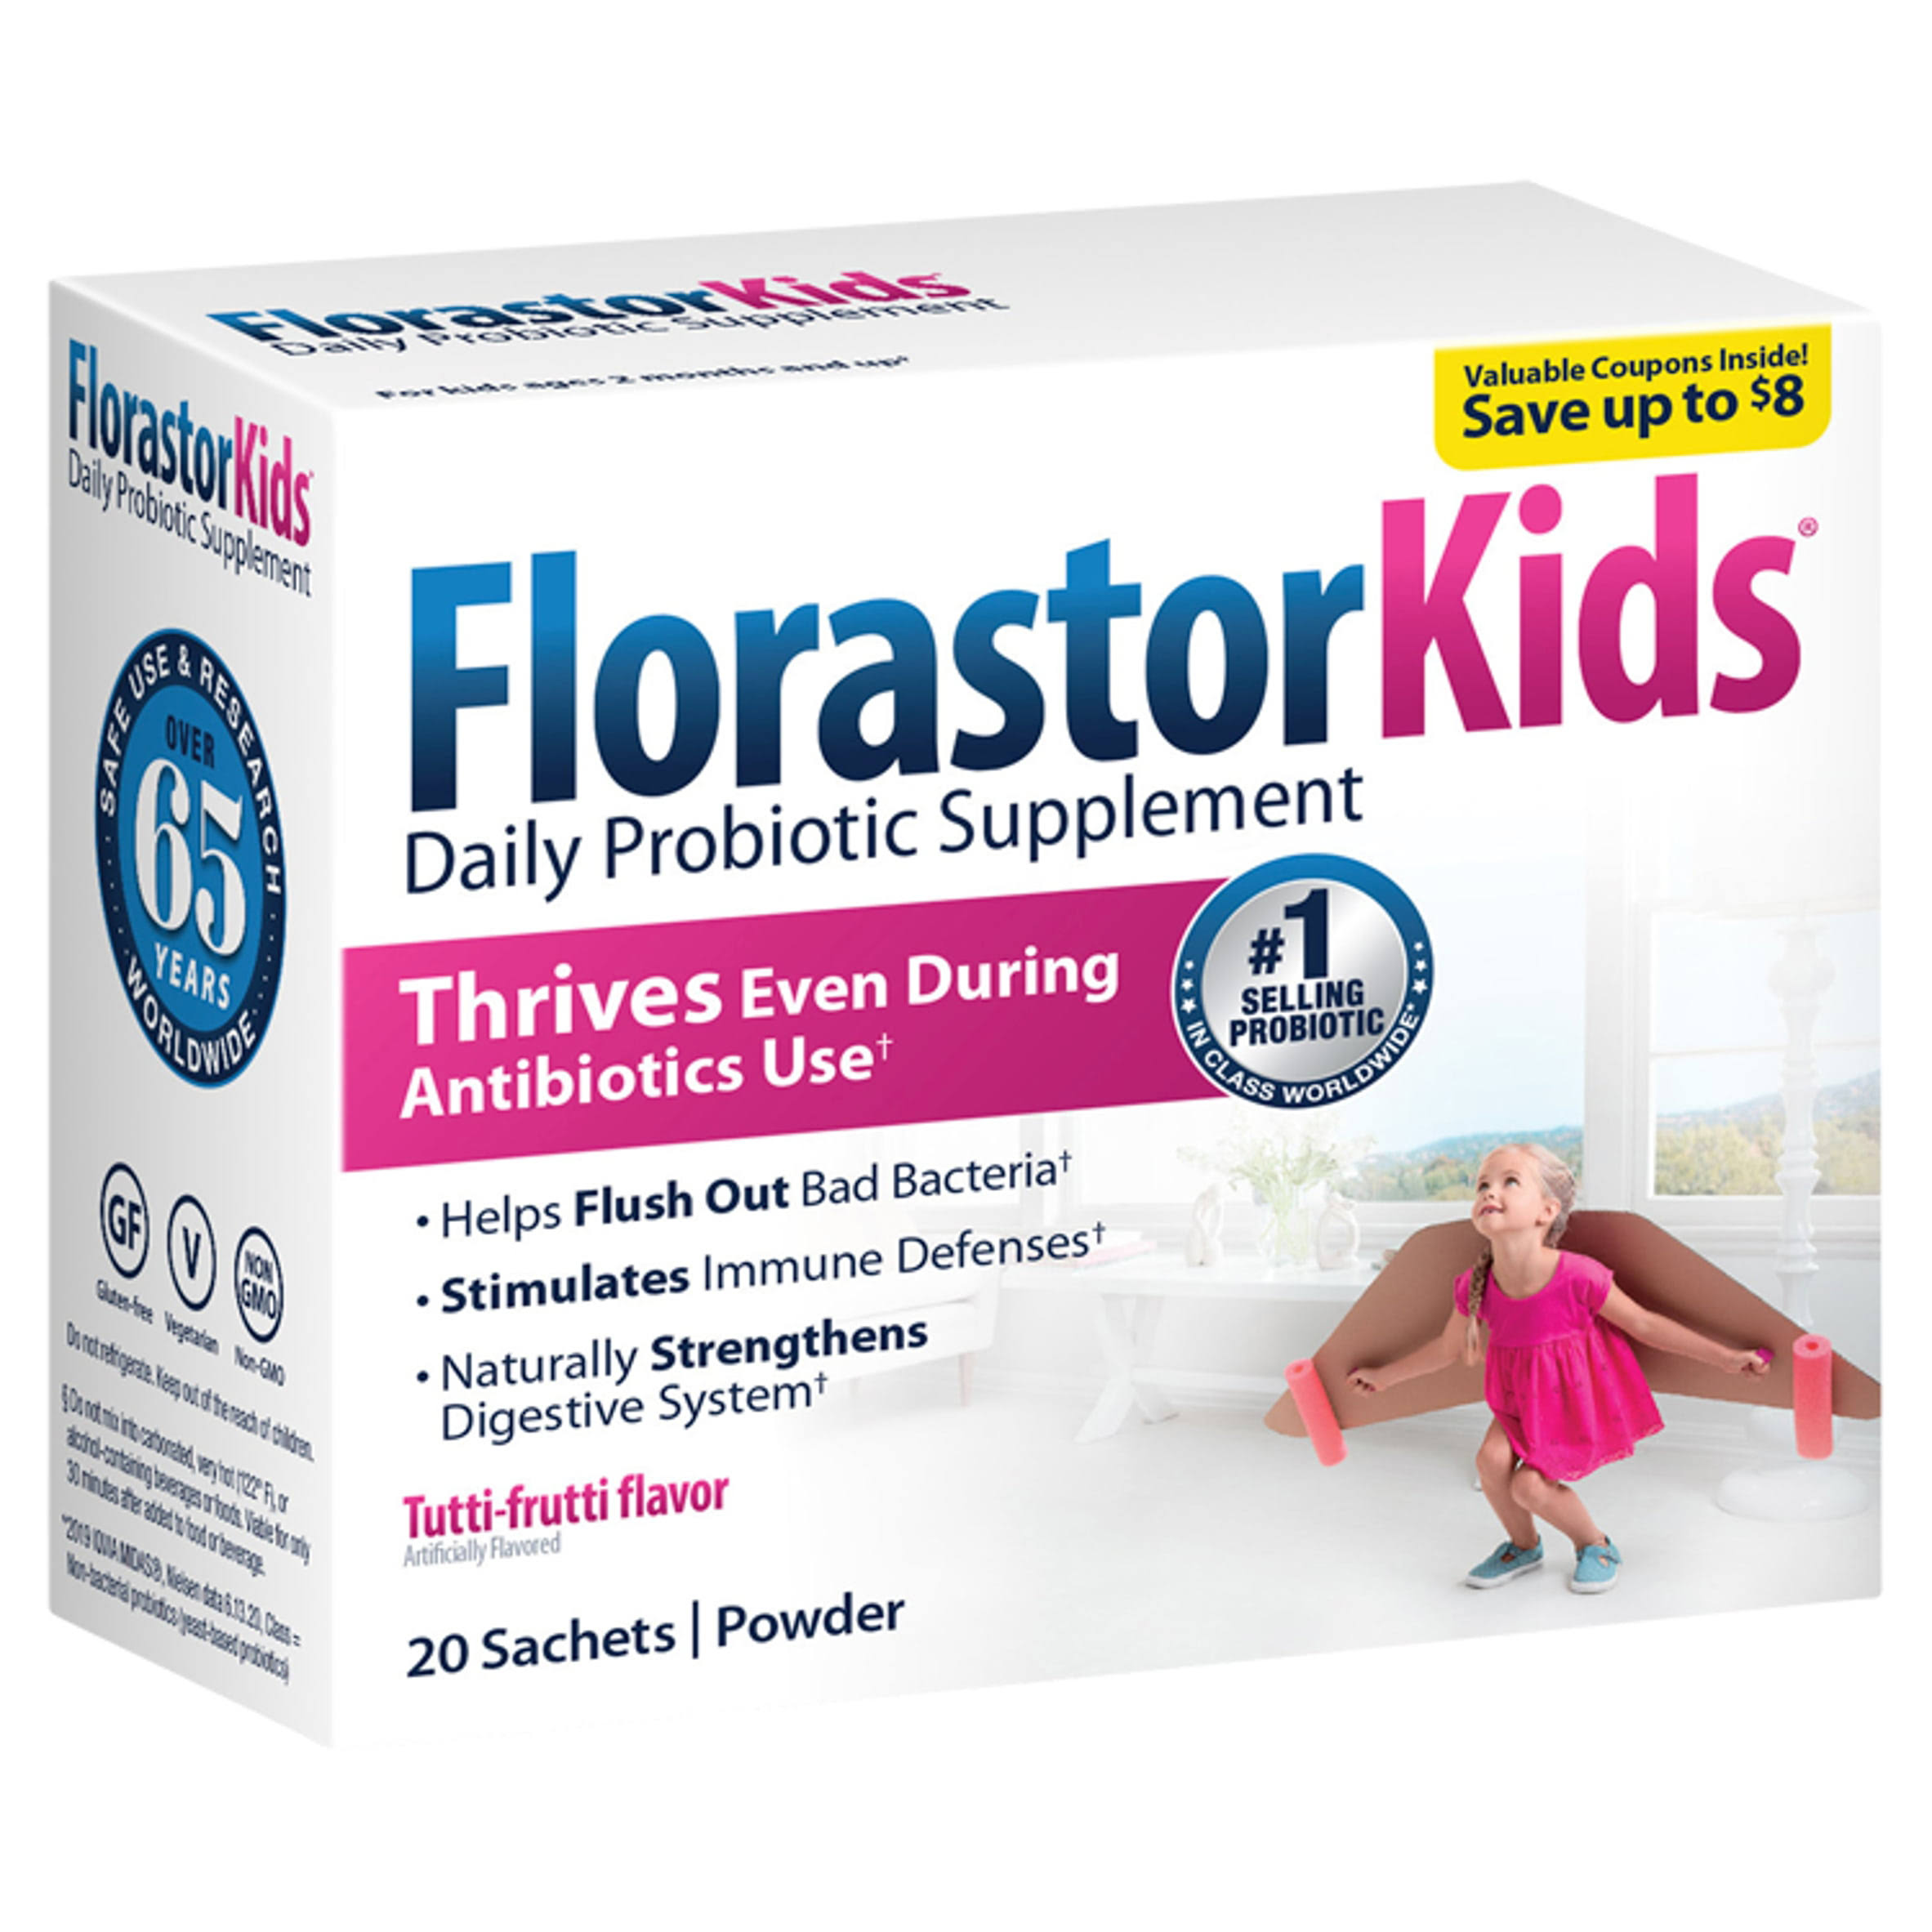 Florastor Kids Daily Probiotic Supplement - 20 Sachets, 250mg